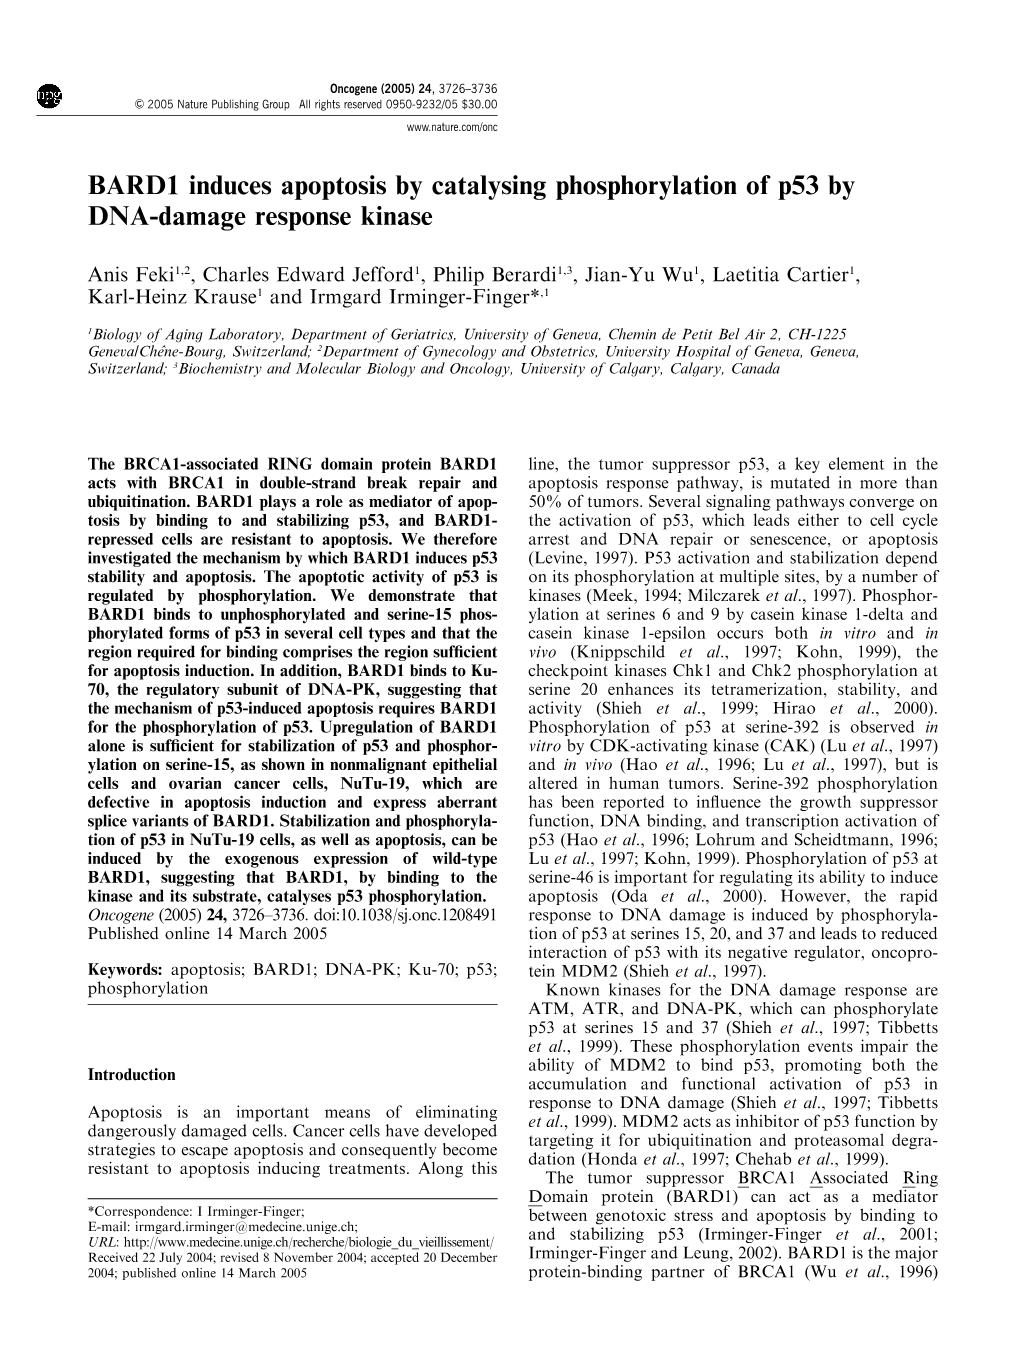 BARD1 Induces Apoptosis by Catalysing Phosphorylation of P53 by DNA-Damage Response Kinase